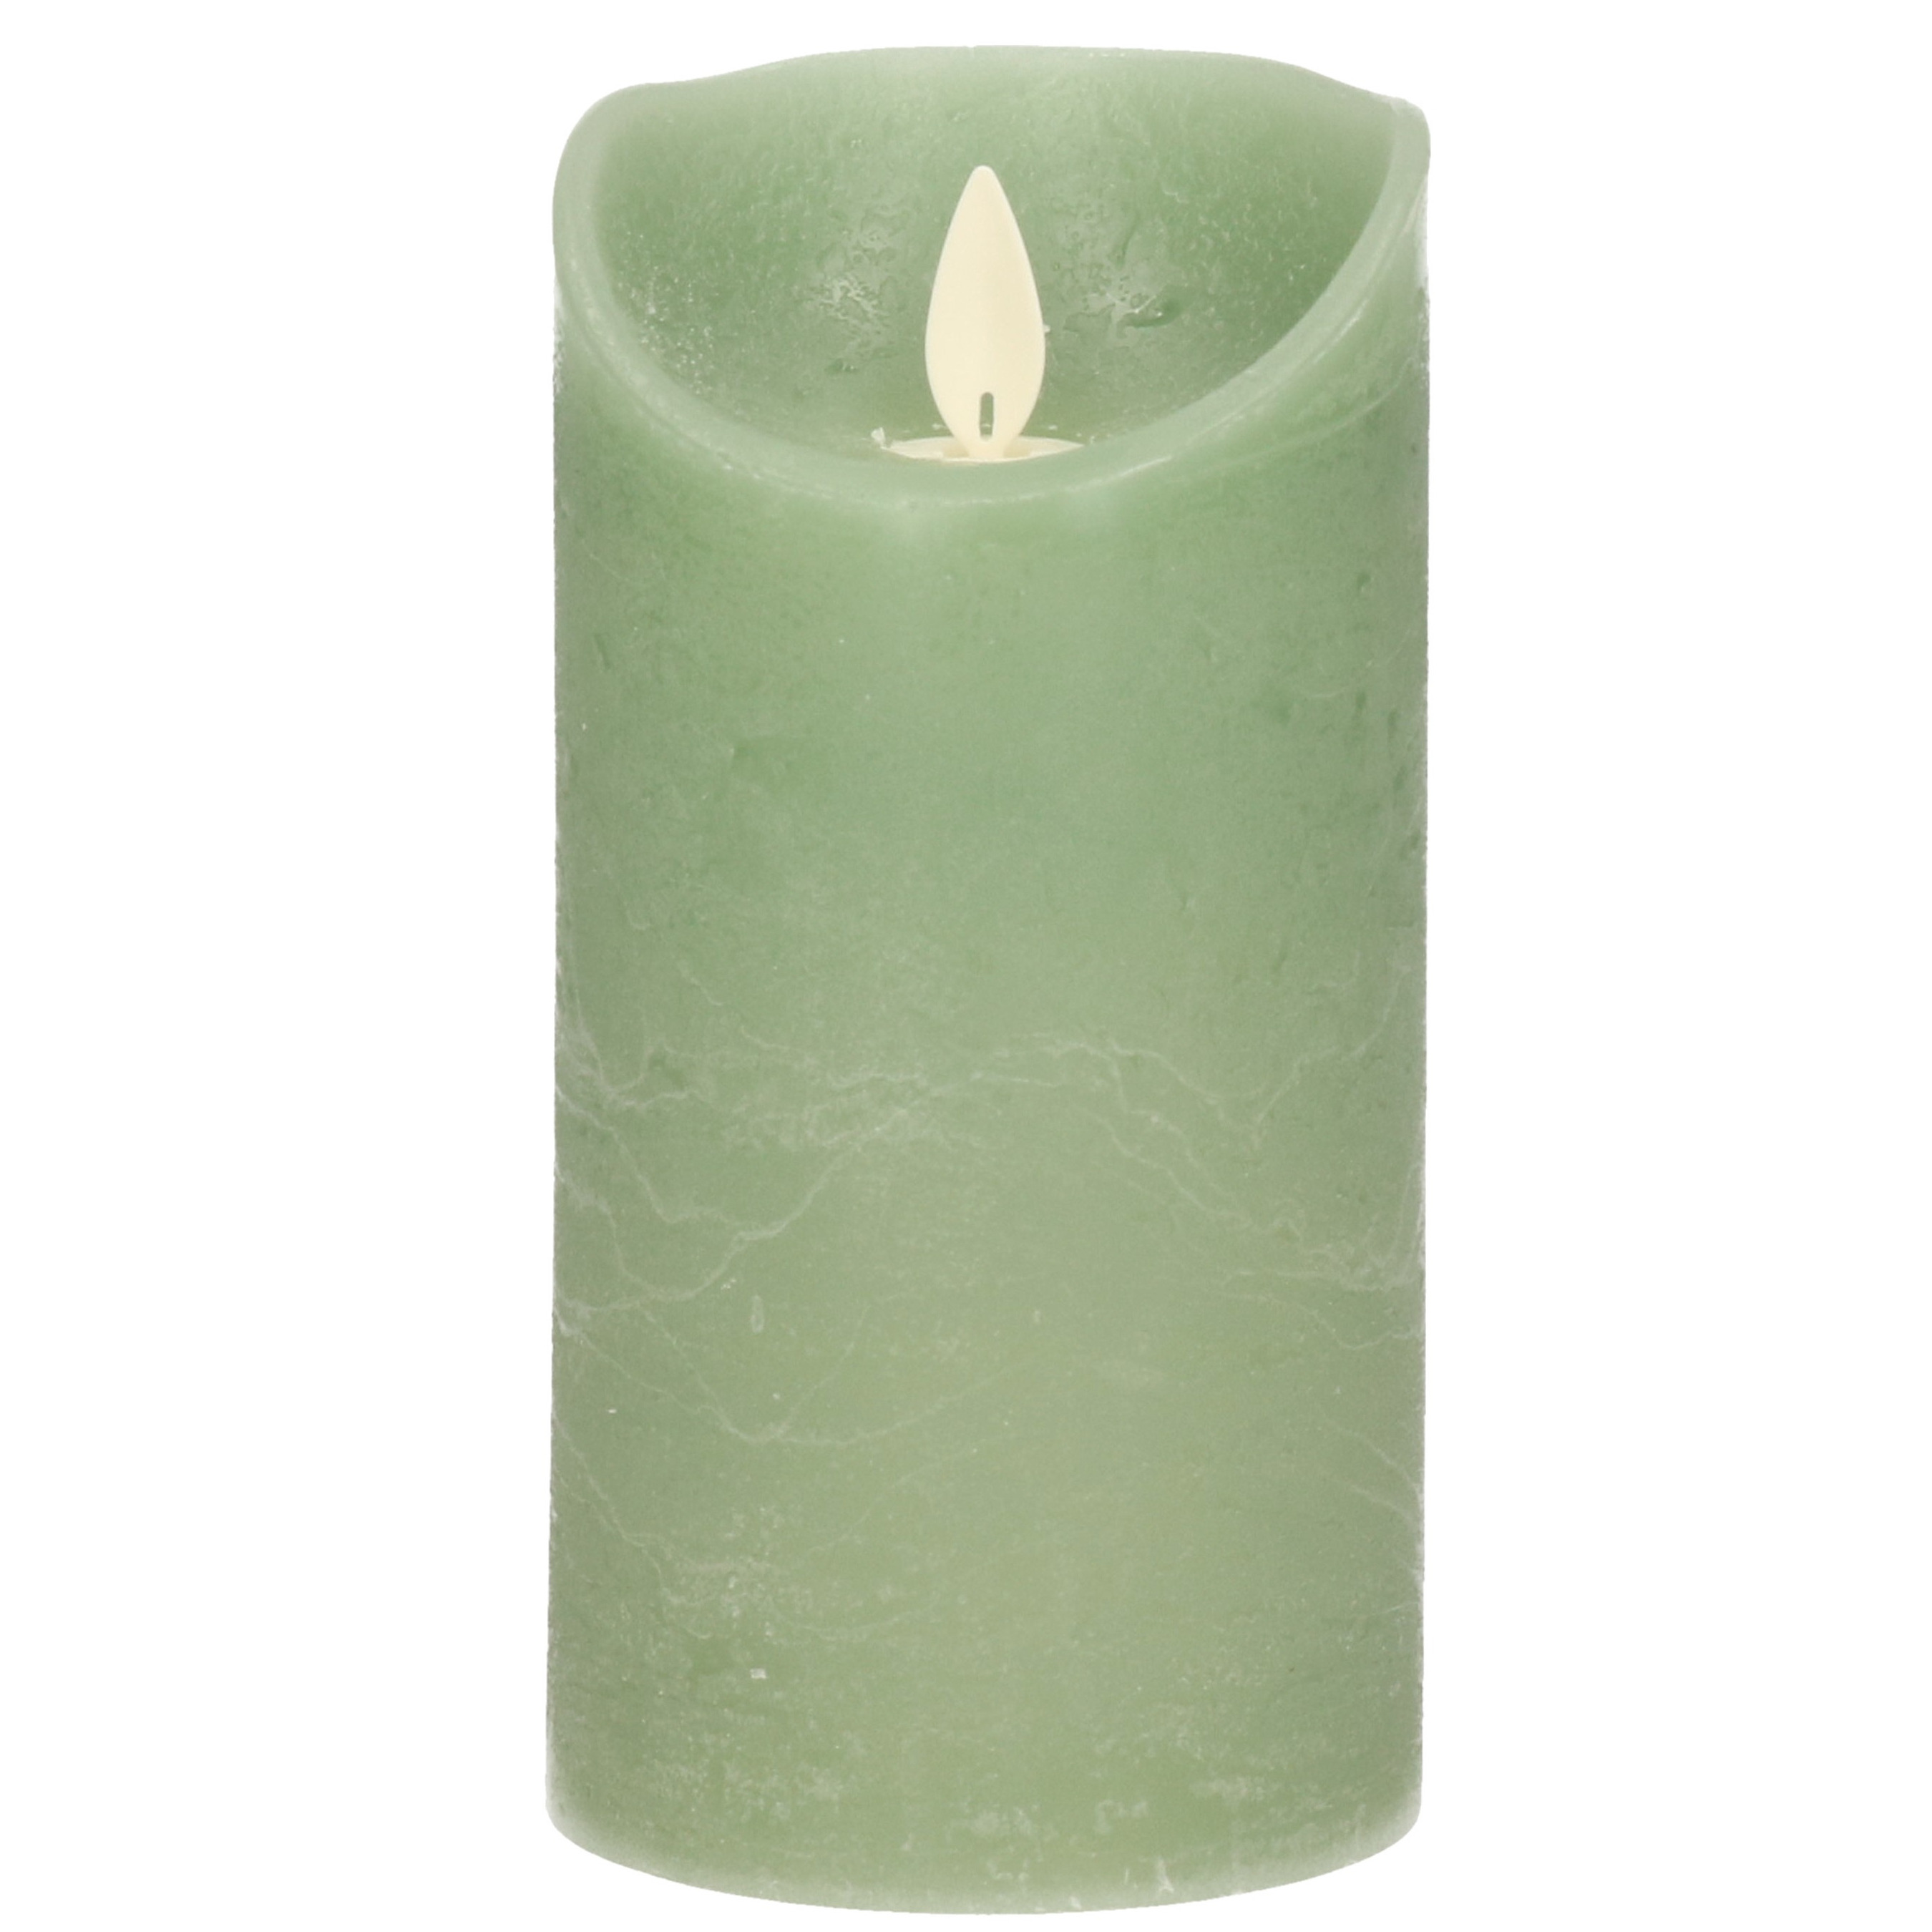 1x Jade groene LED kaarsen-stompkaarsen met bewegende vlam 15 cm